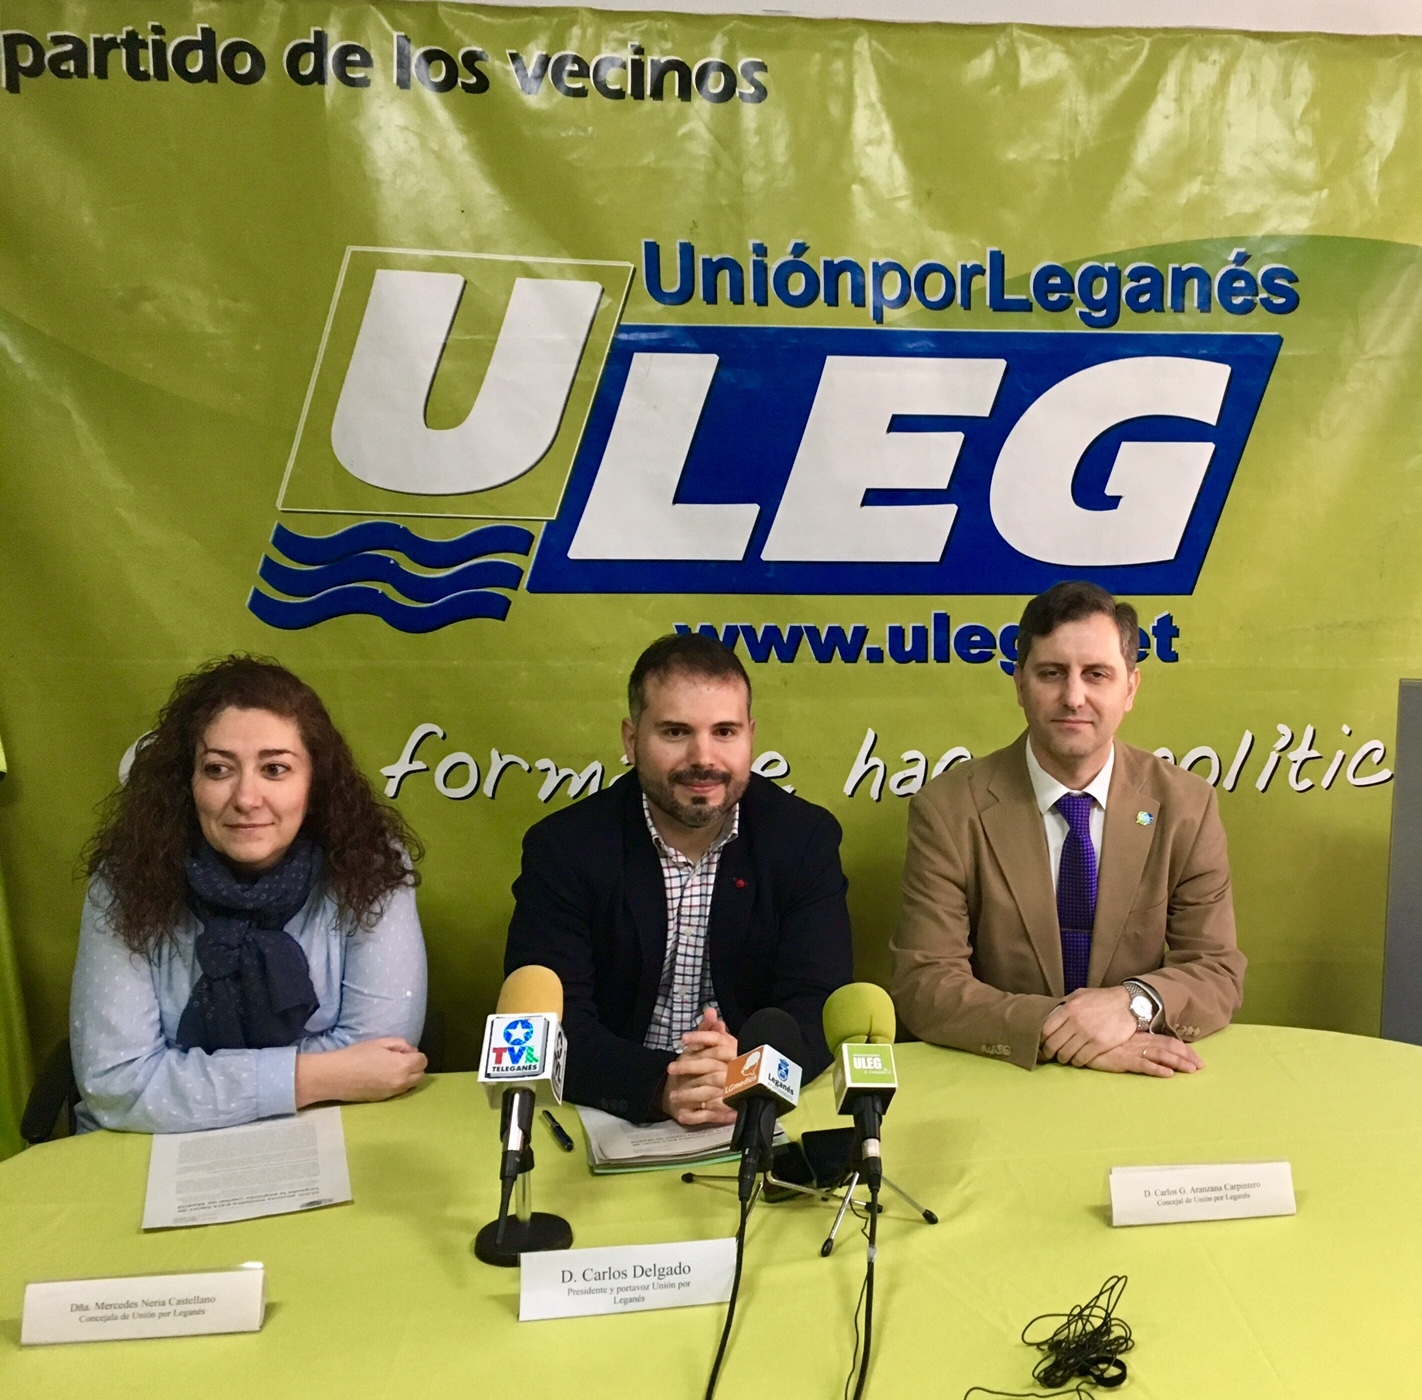 Leganés: El portavoz del PSOE pide disculpas a Carlos Delgado